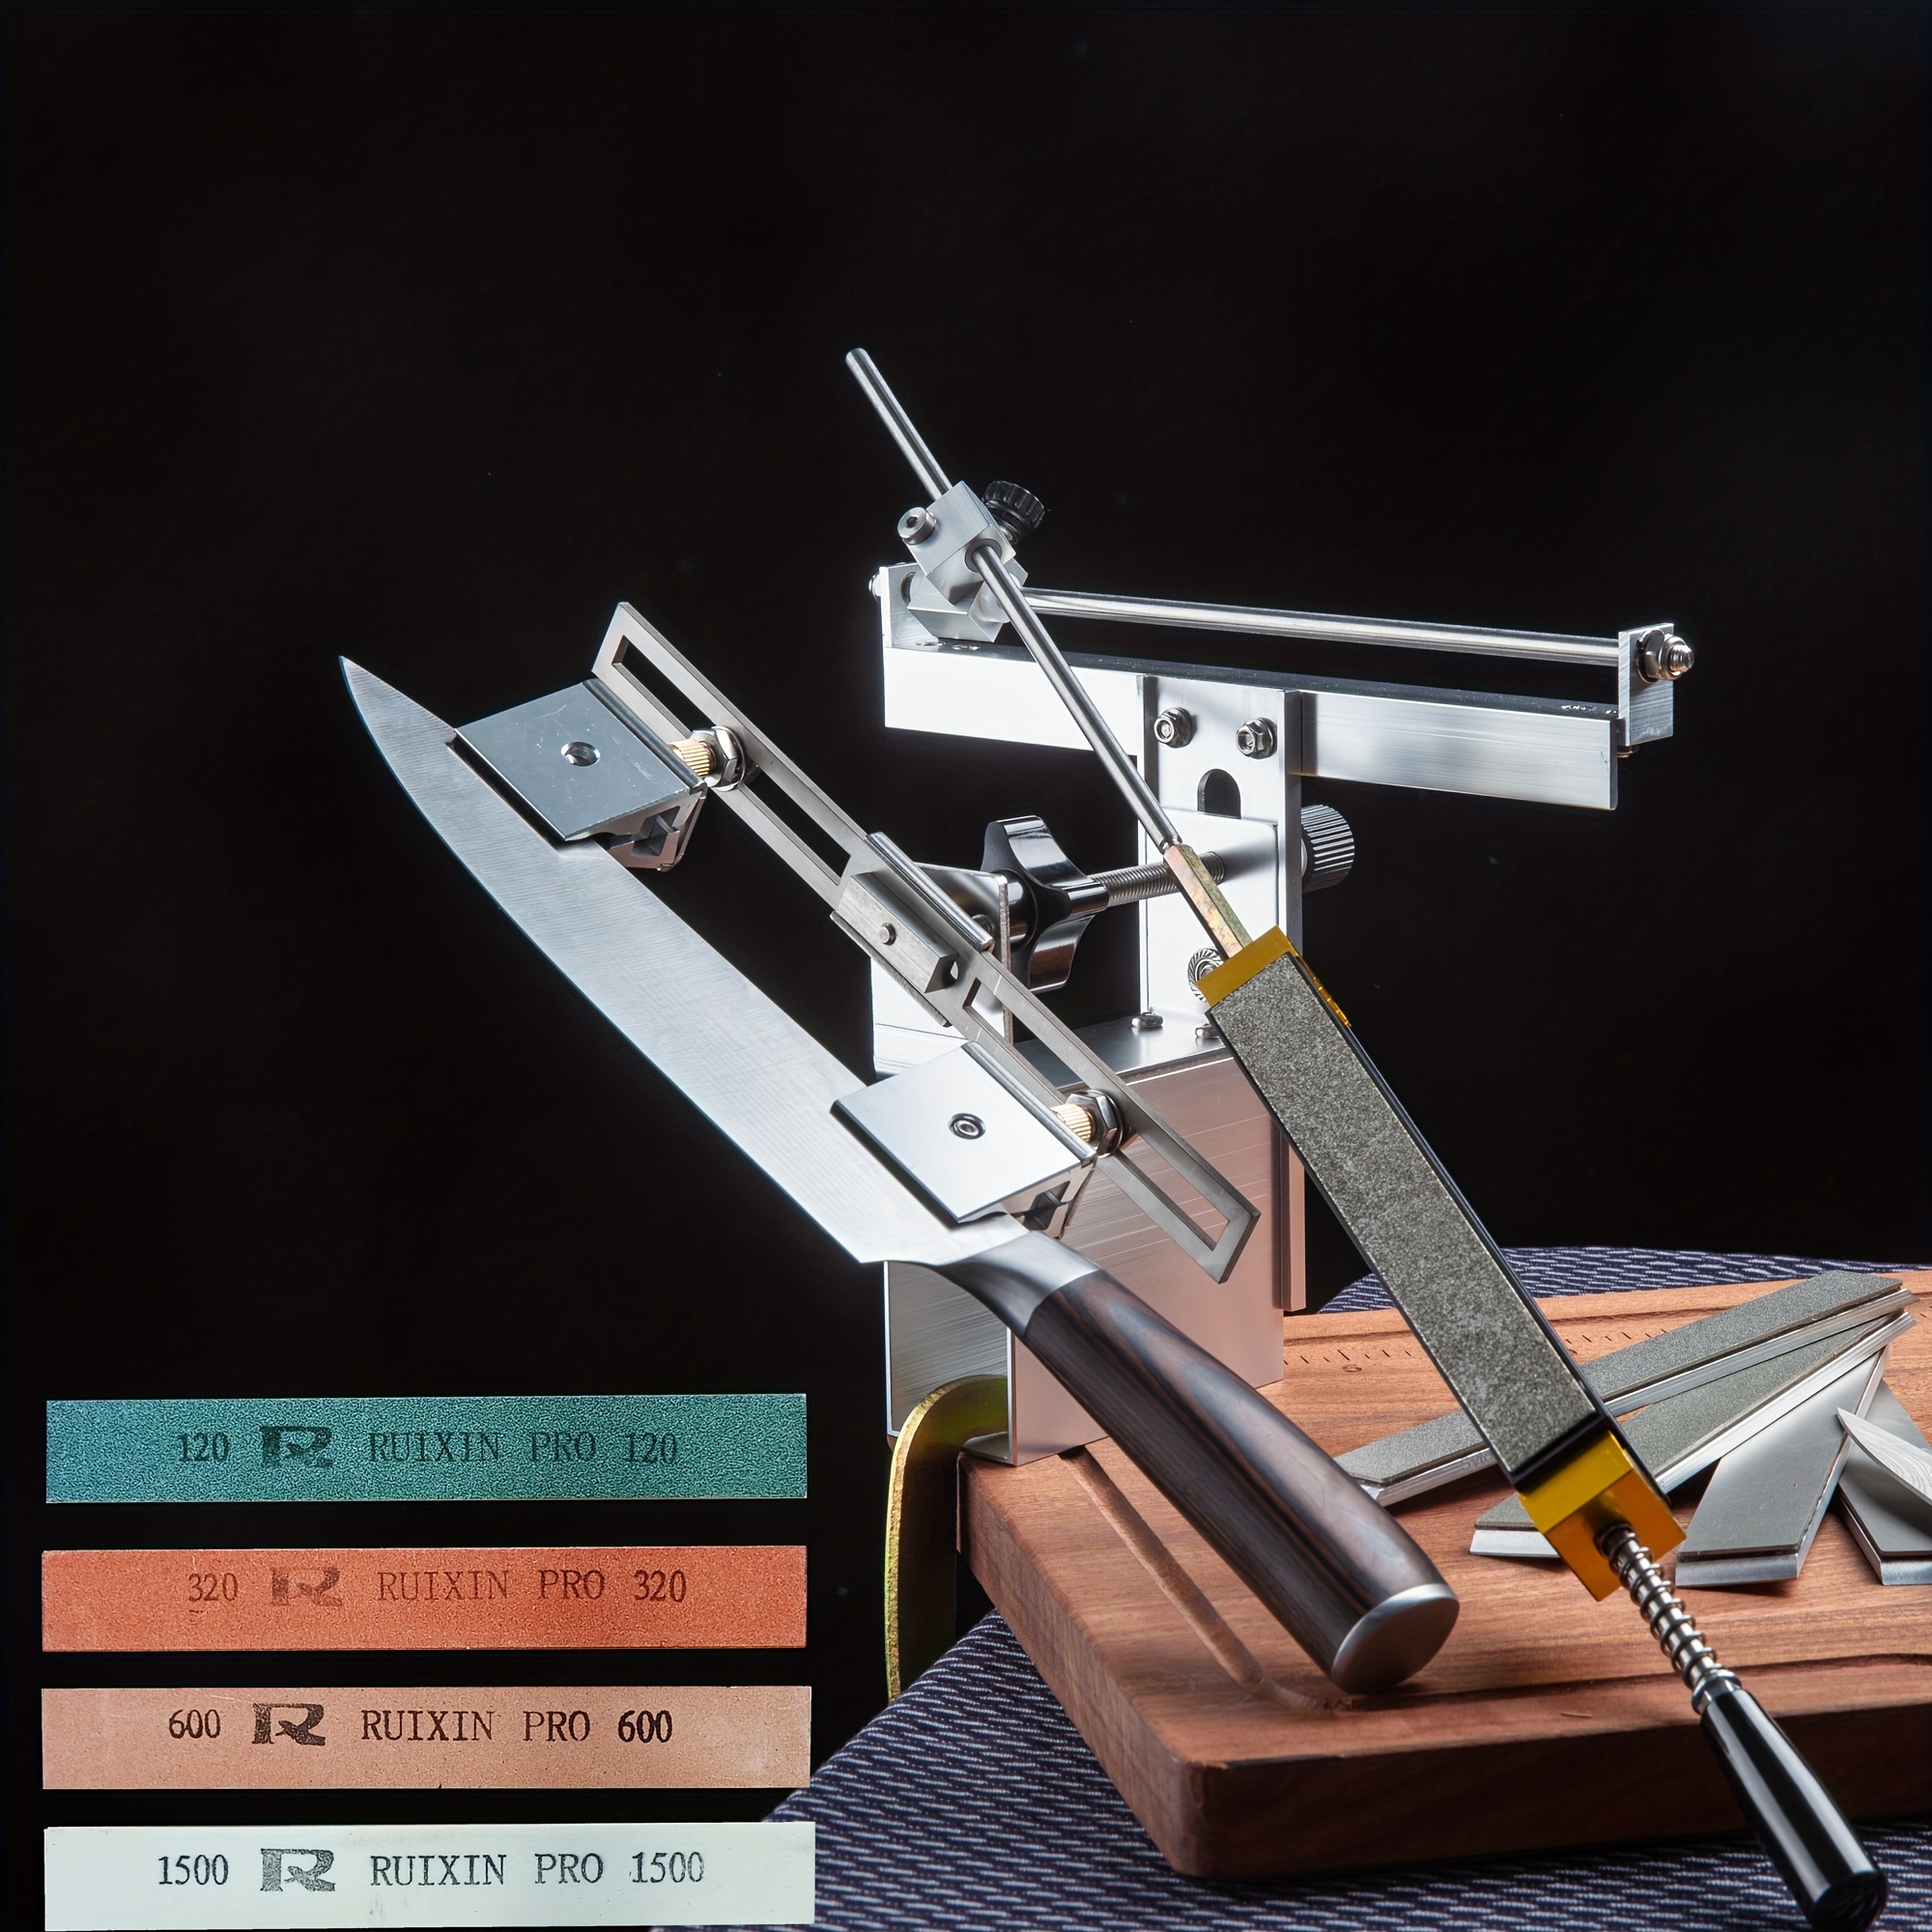 Ruixin Pro Sharp - Knife Sharpening Kits, Sharpening Stones, And More